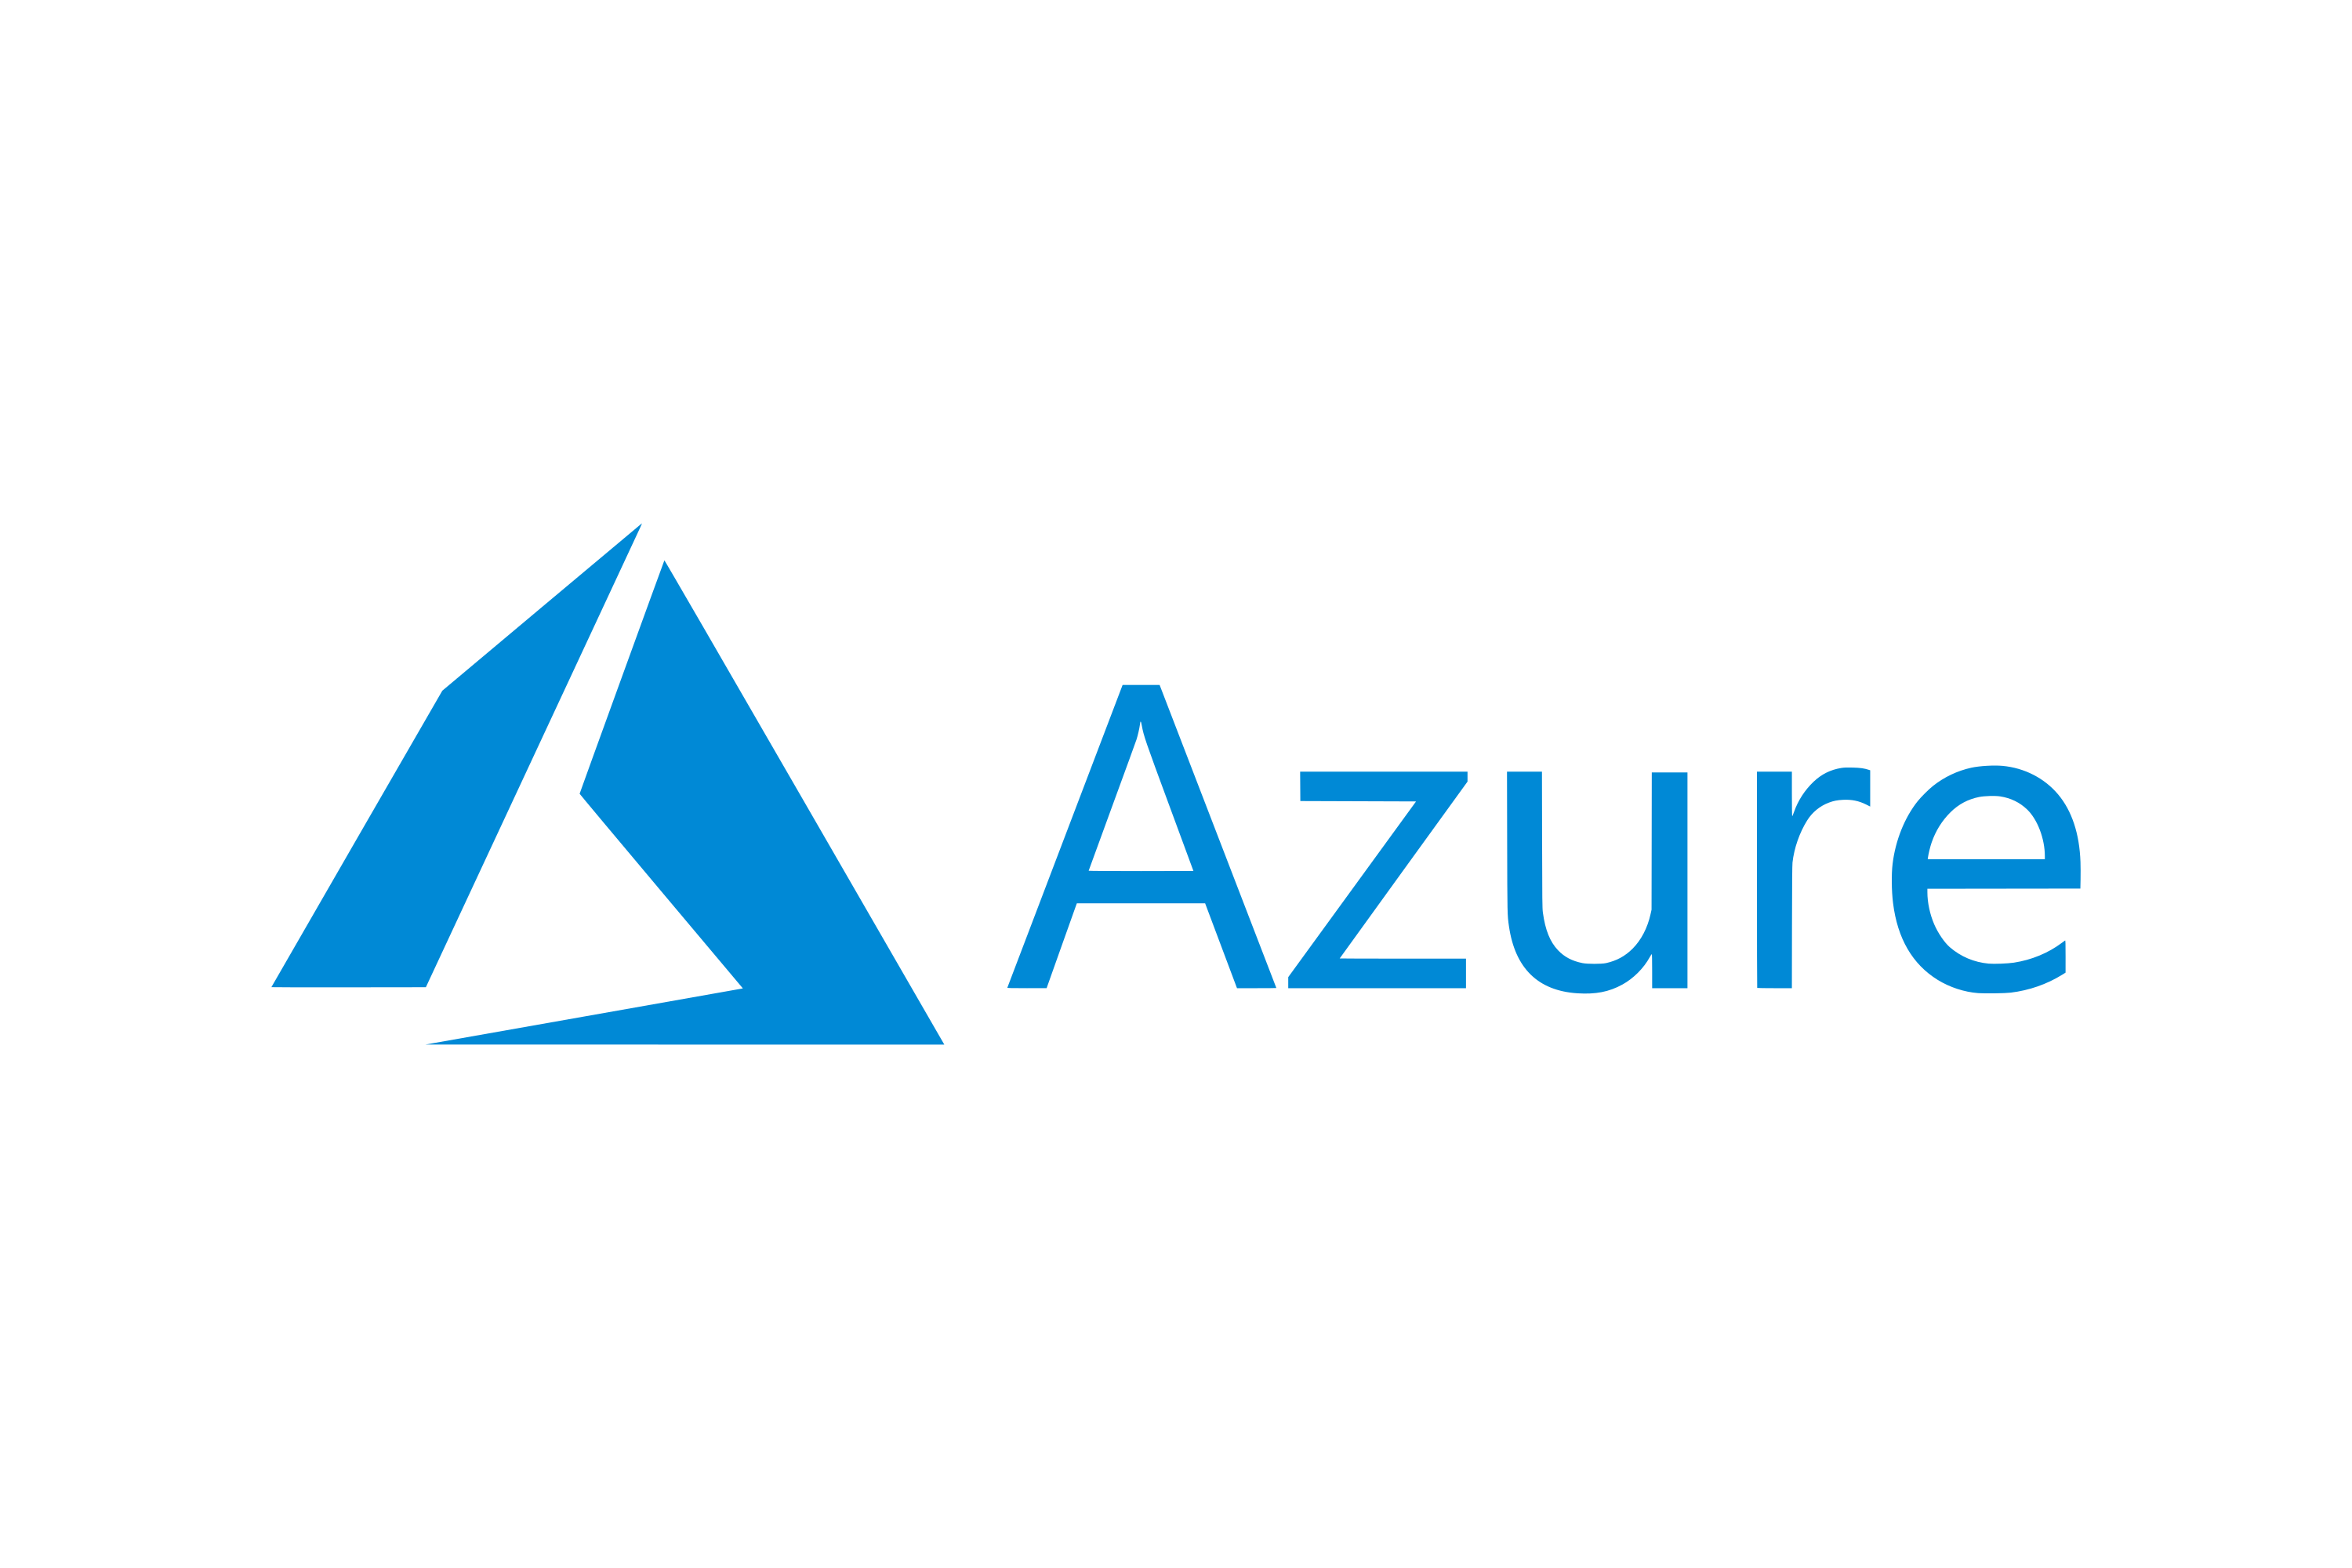 Microsoft Azure cloud solutions